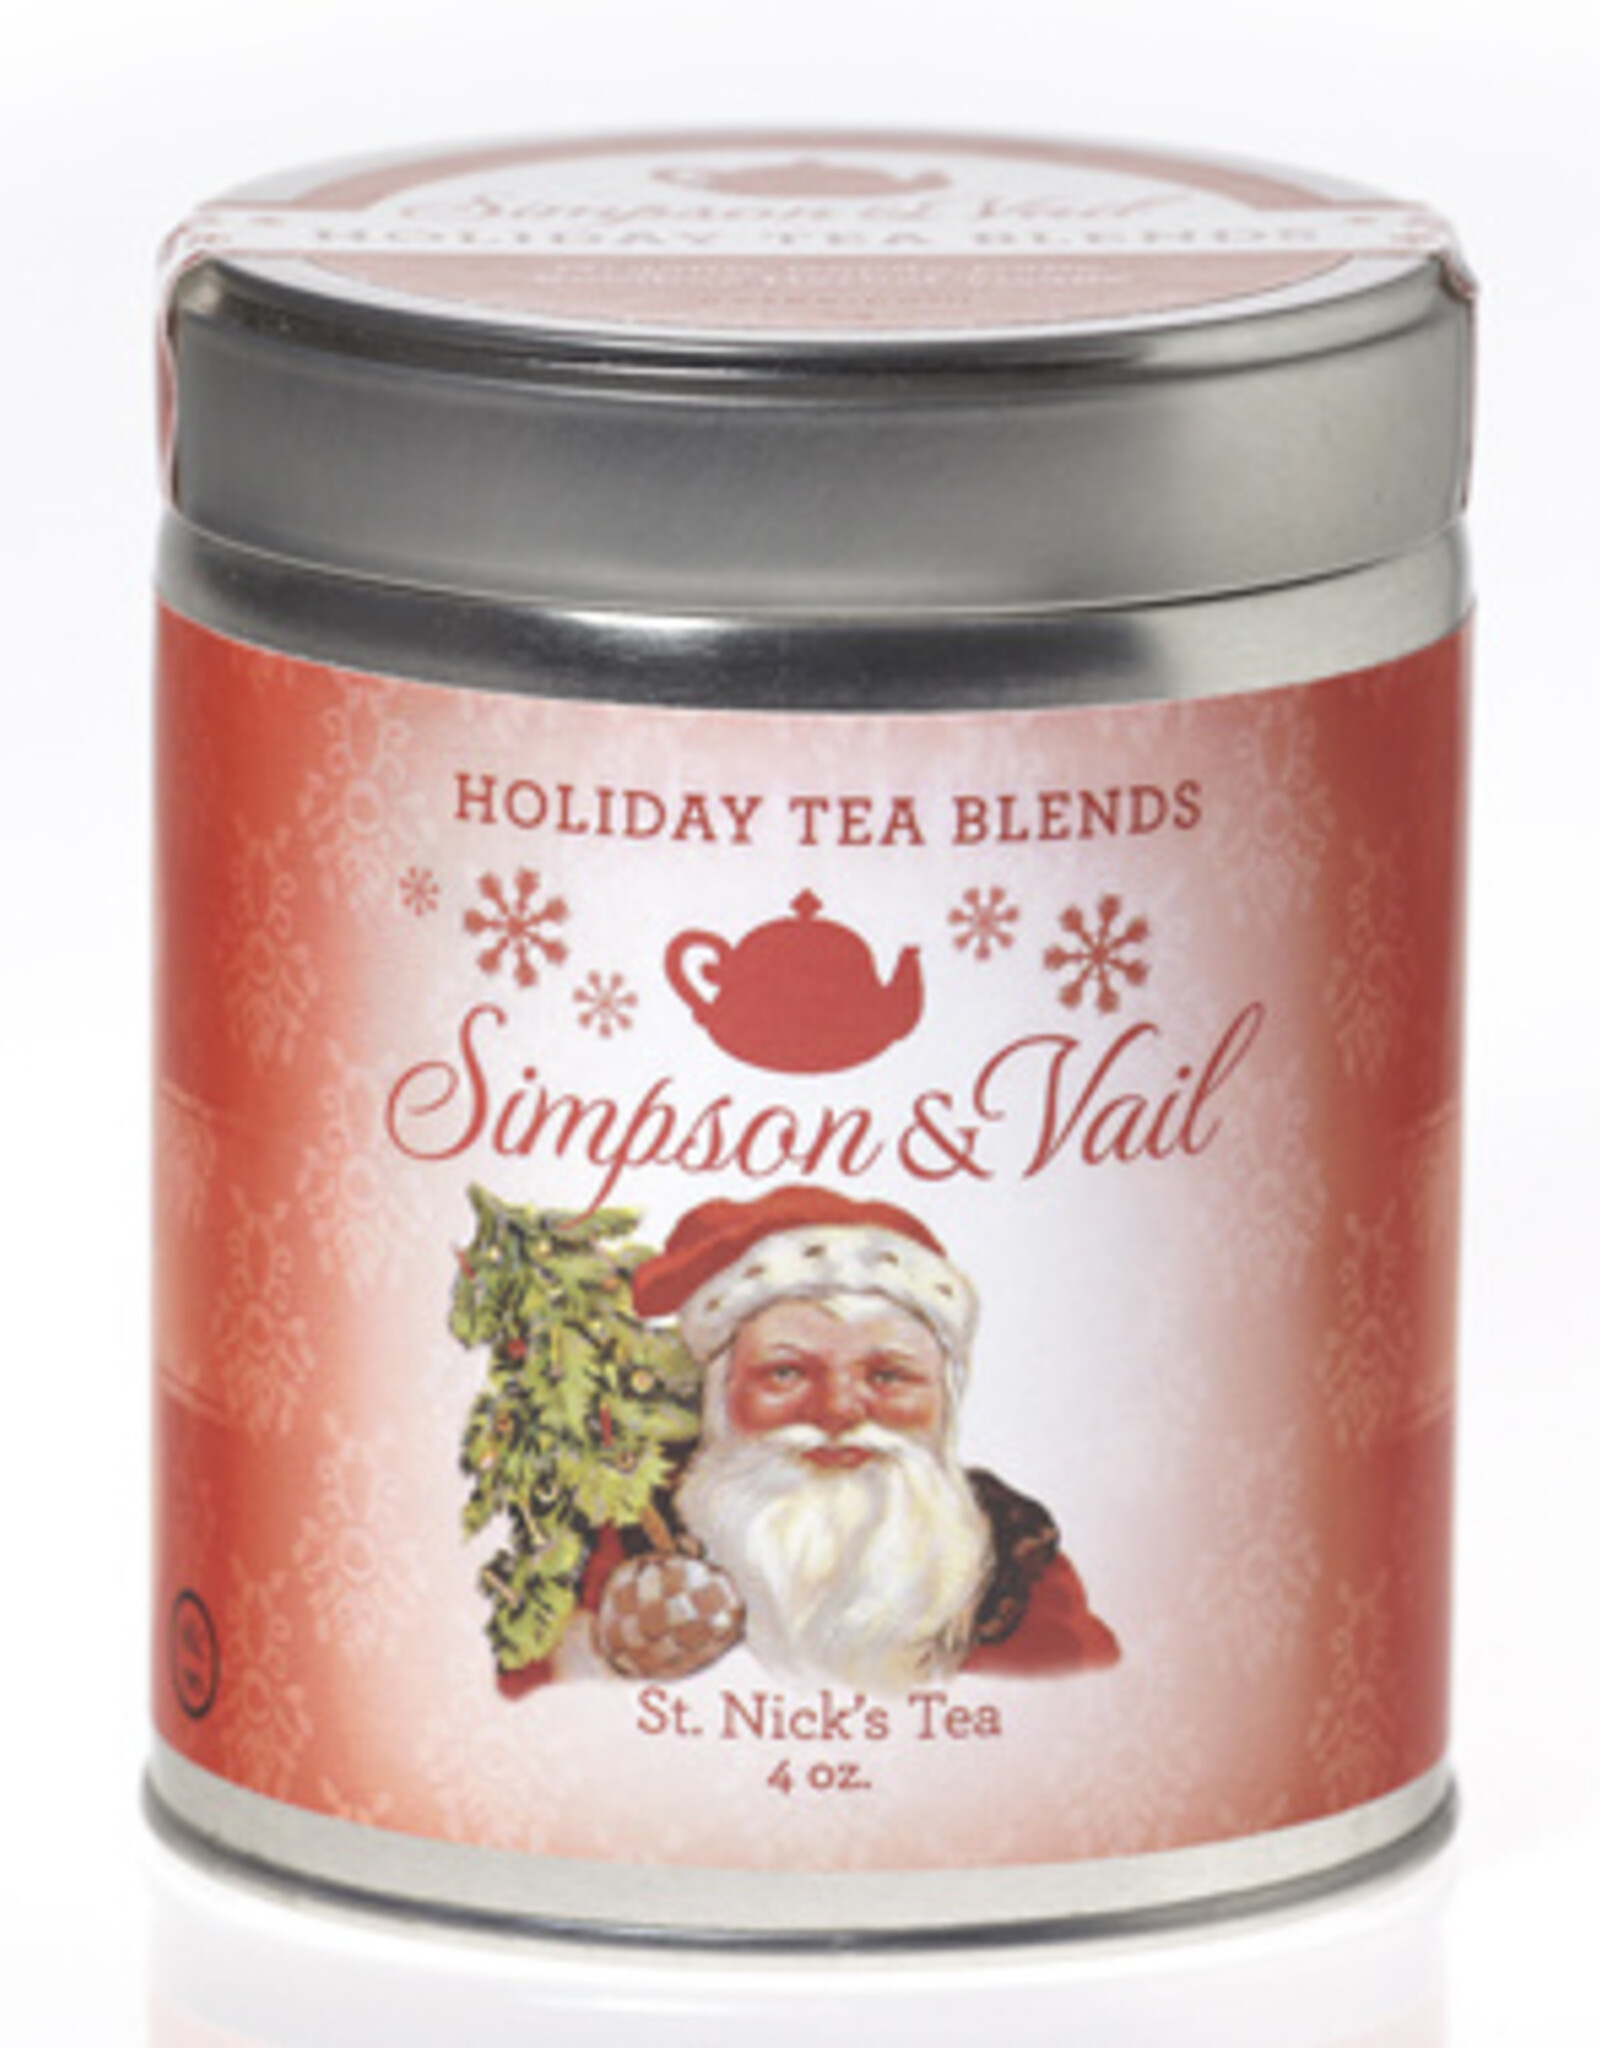 Simpson & Vail St. Nick's Tea